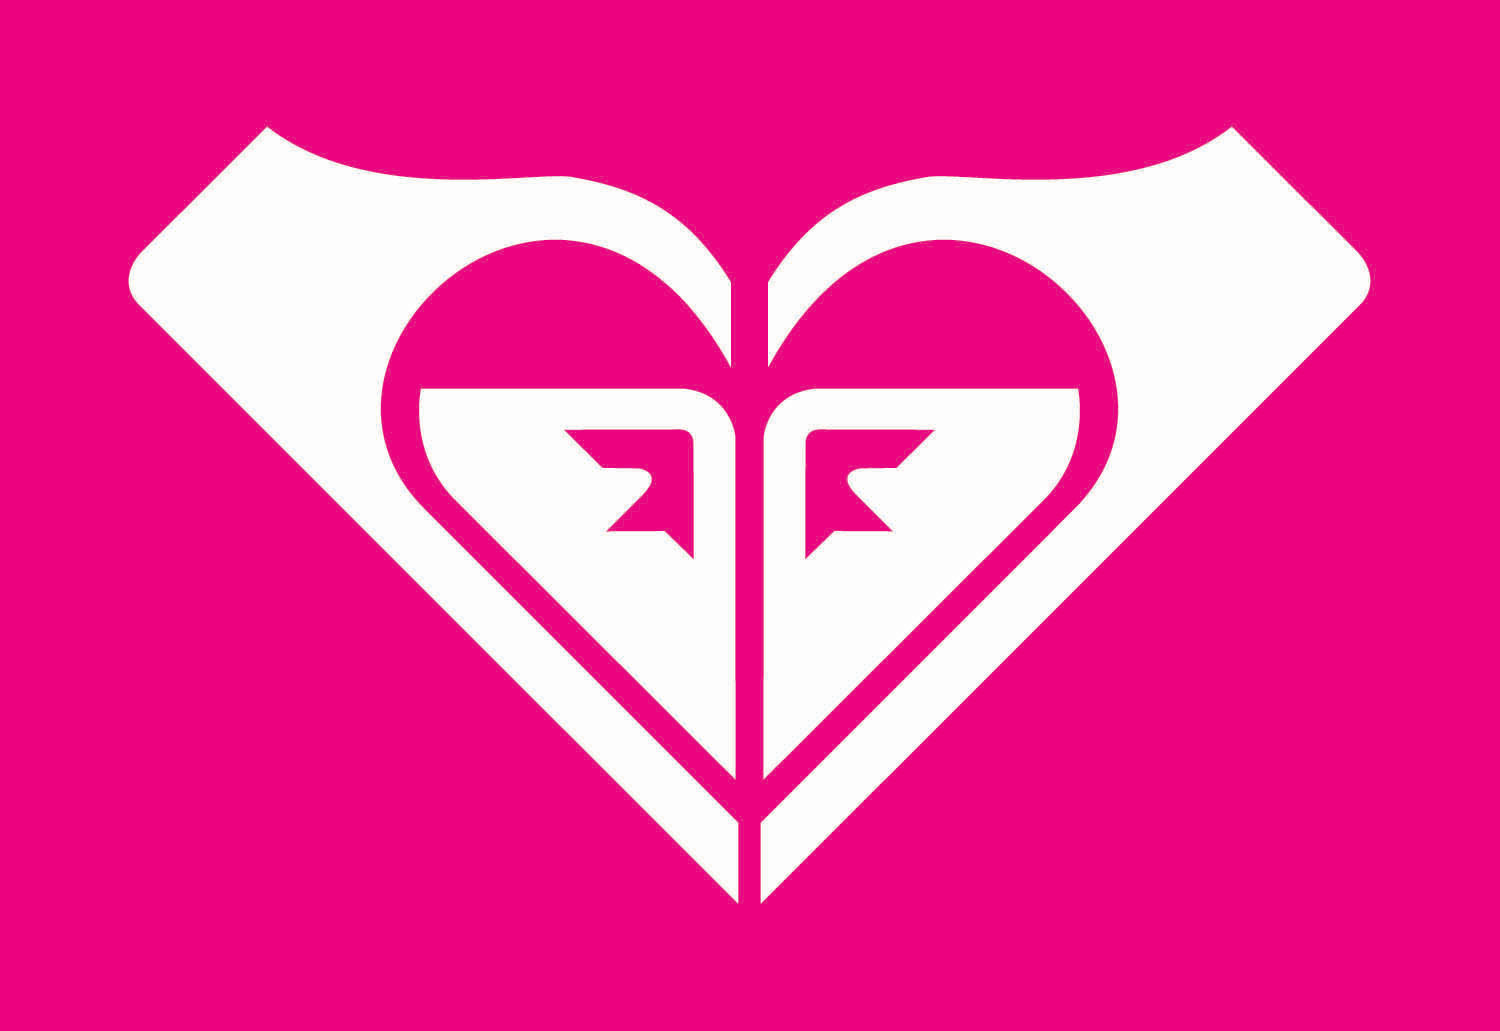 Roxy white logo with pink flower sticker 